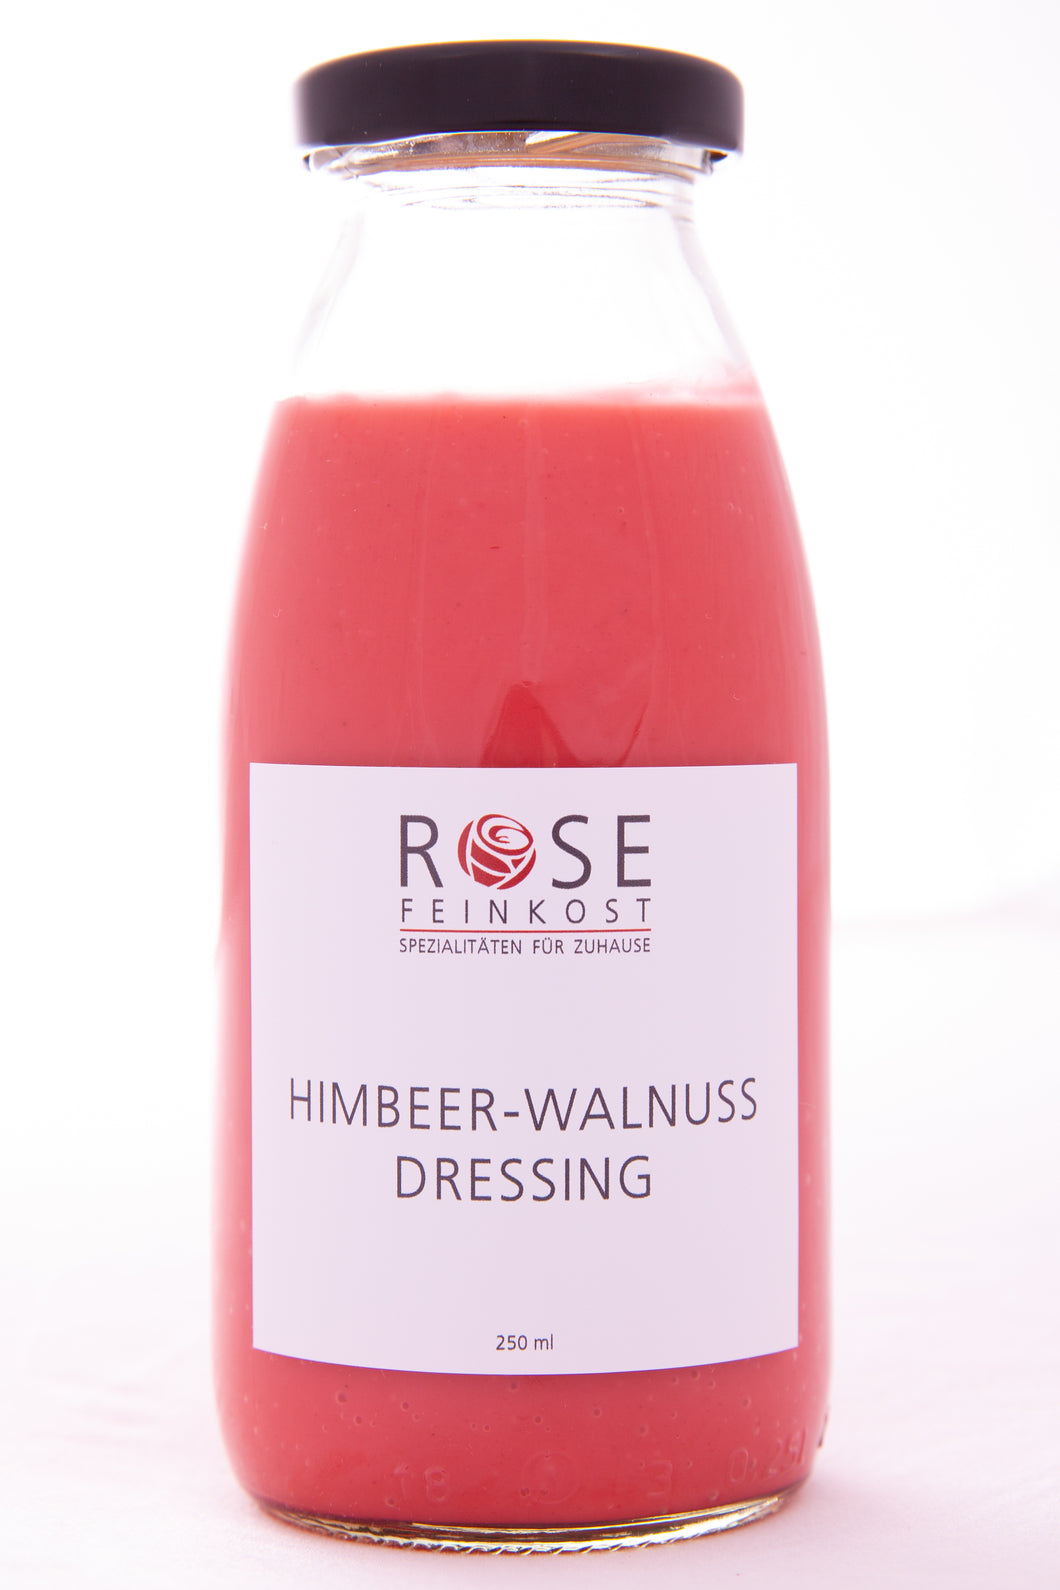 Himbeer-Walnuss Dressing